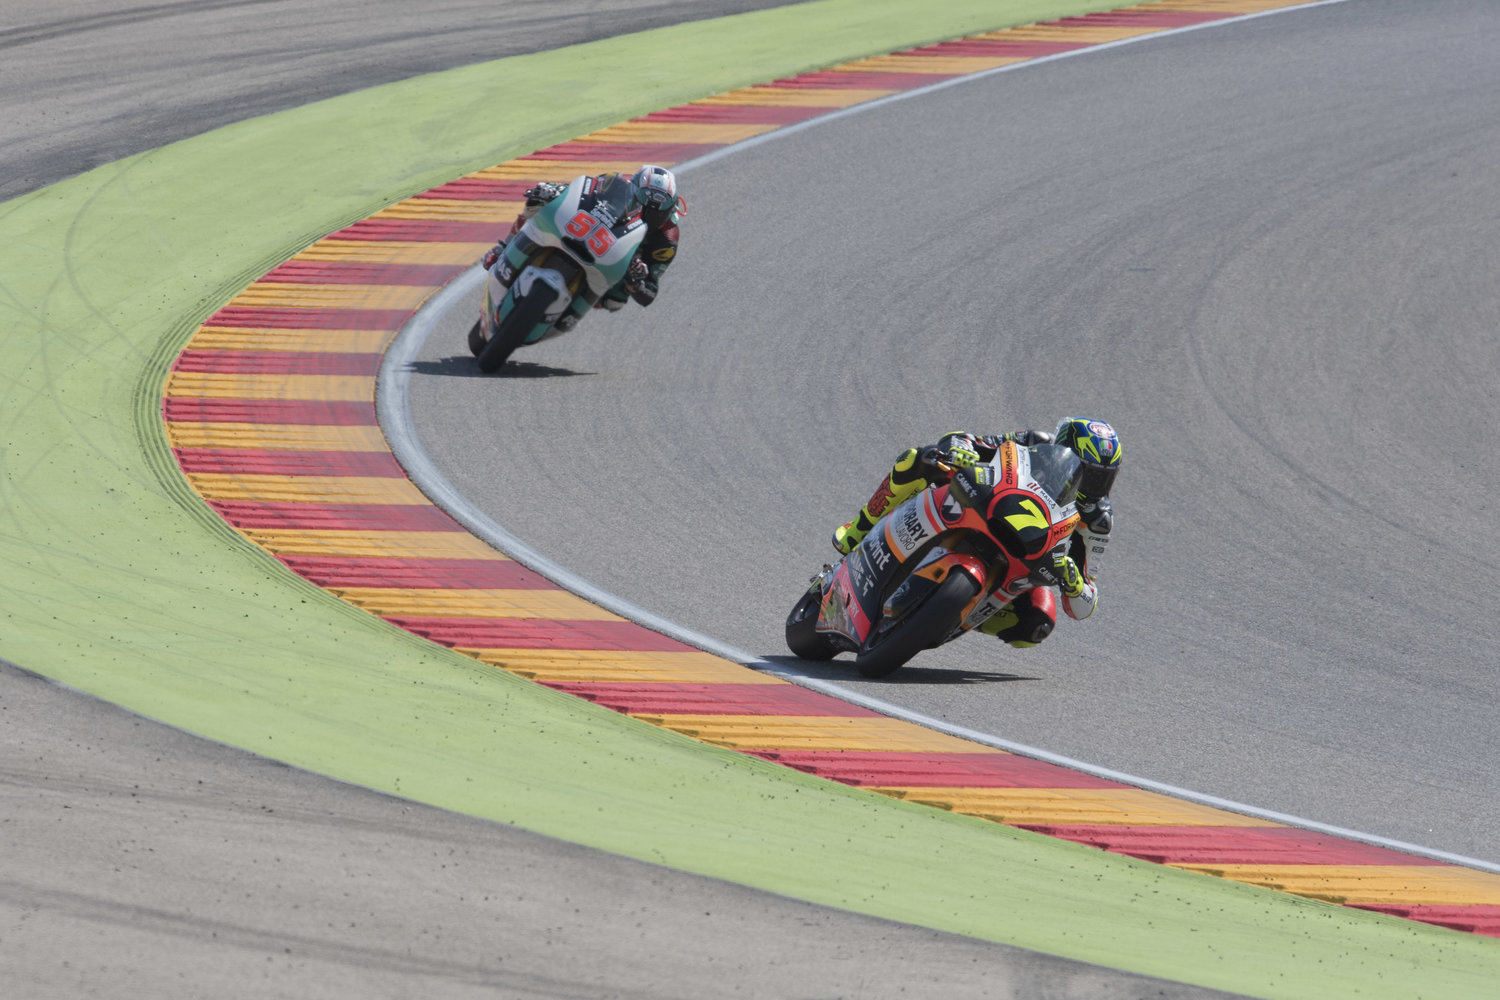 Forward Racing Team’s Baldassarri takes home hard-fought points in Aragon